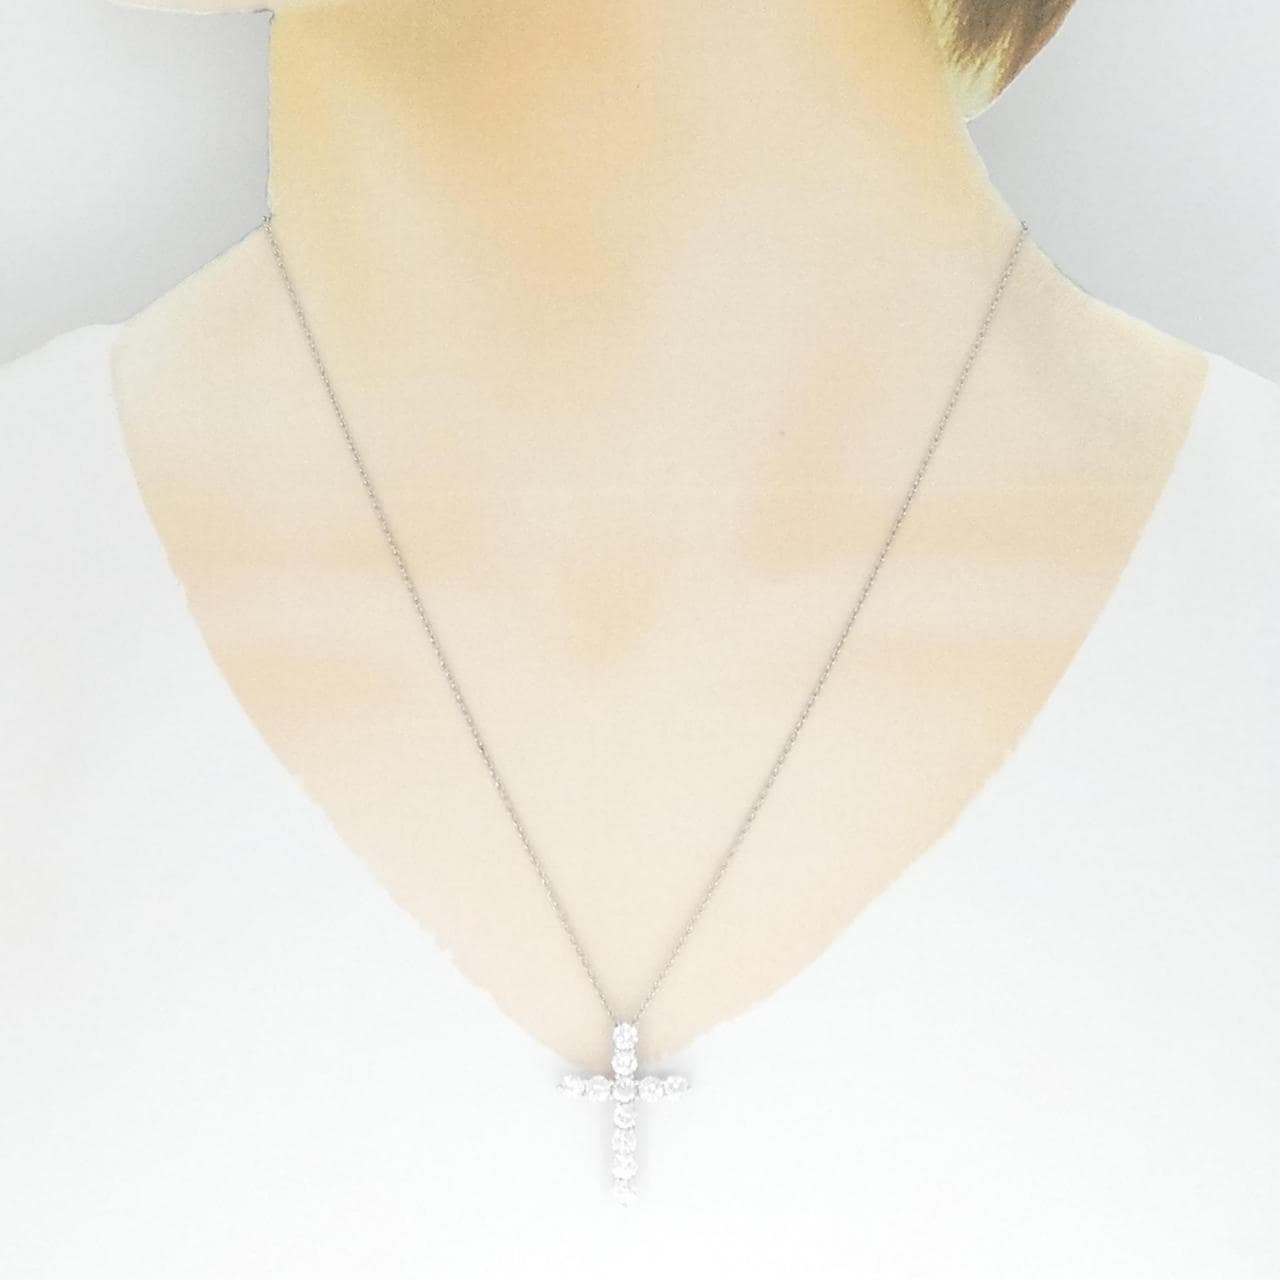 TIFFANY large cross necklace